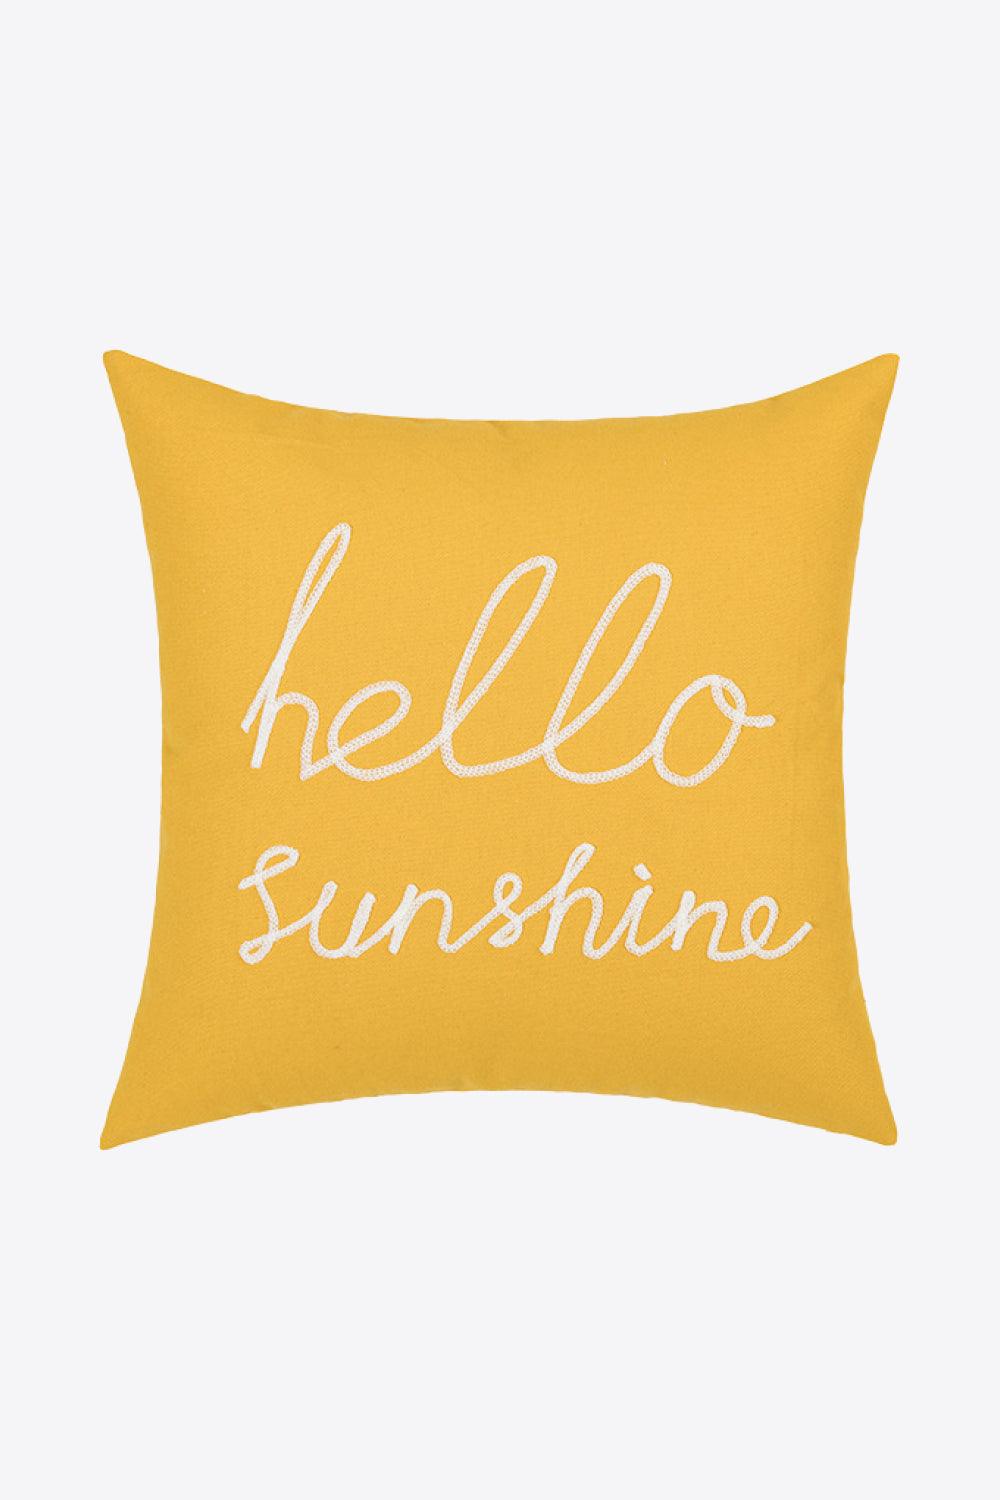 Hello Sunshine Punch-Needle Decorative Throw Pillow Case - Olive Ave